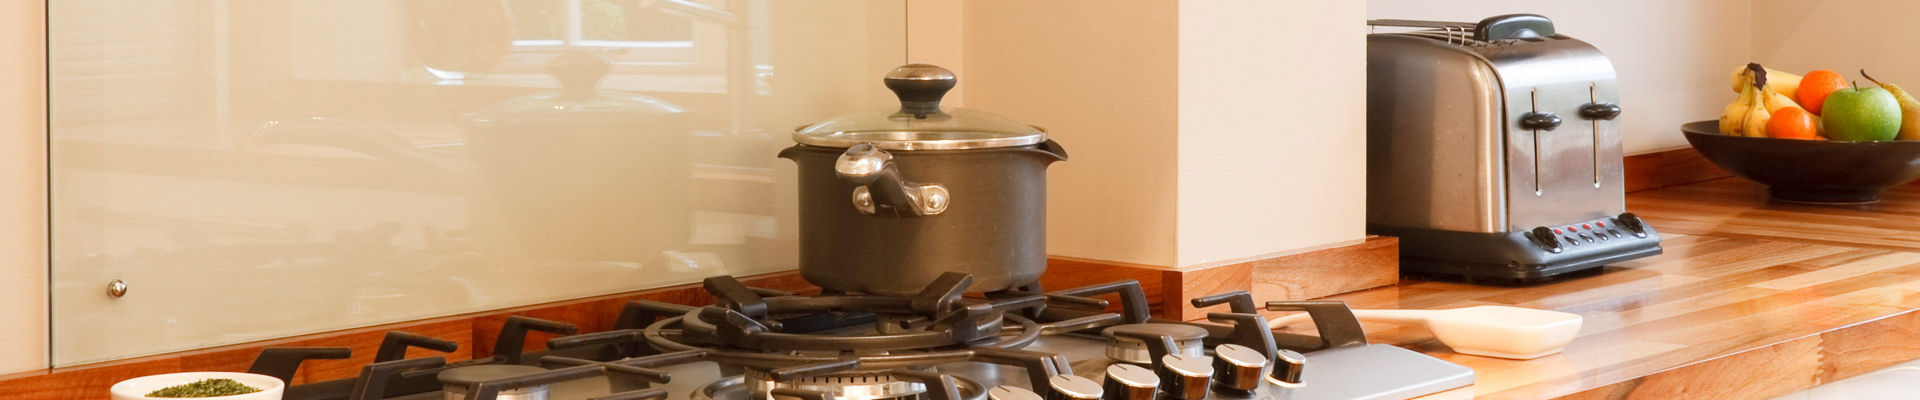 Kitchen stove with pan overheat